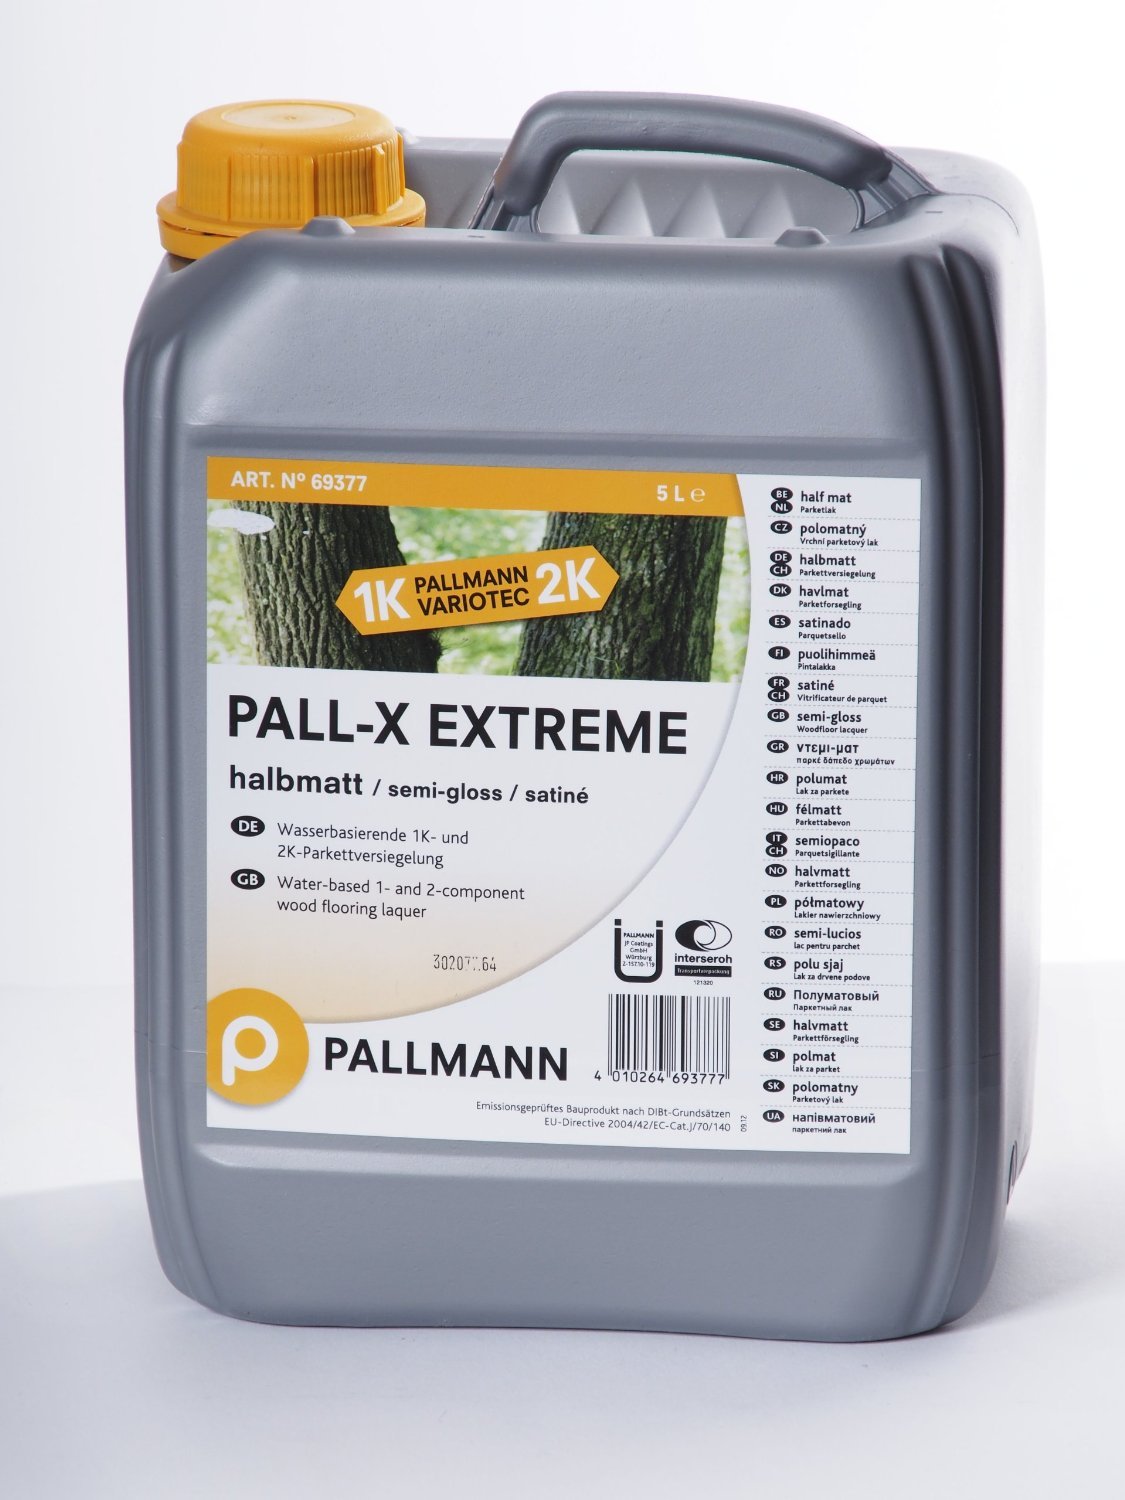 Pallmann Pall-X Extreme jednoslokov - polomat 5l